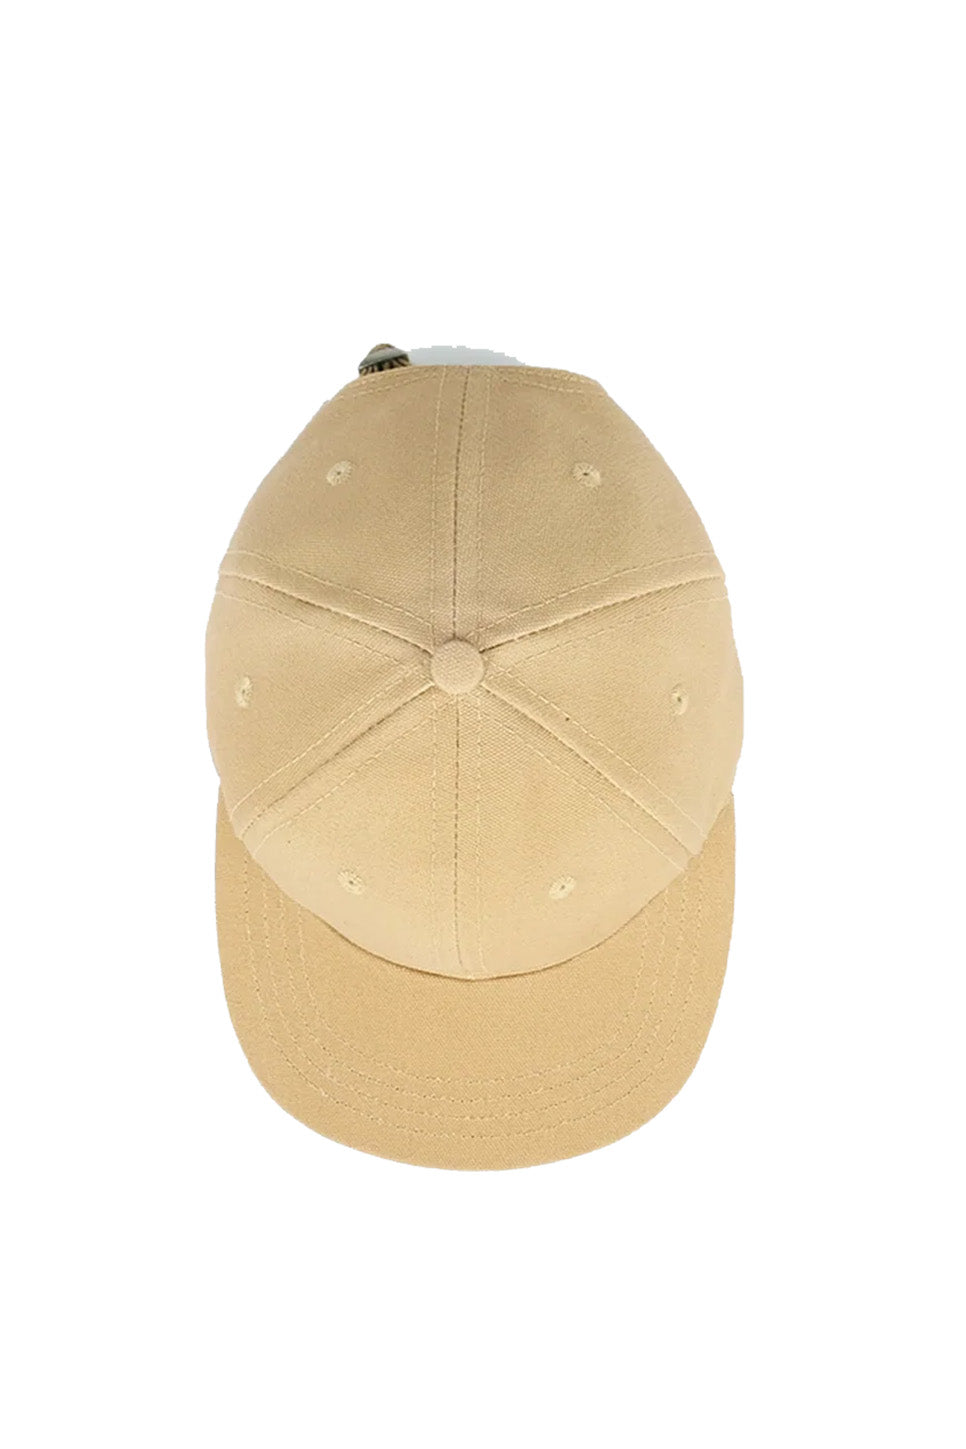 Dehen - Baseball Hat - Alvord Khaki - Top